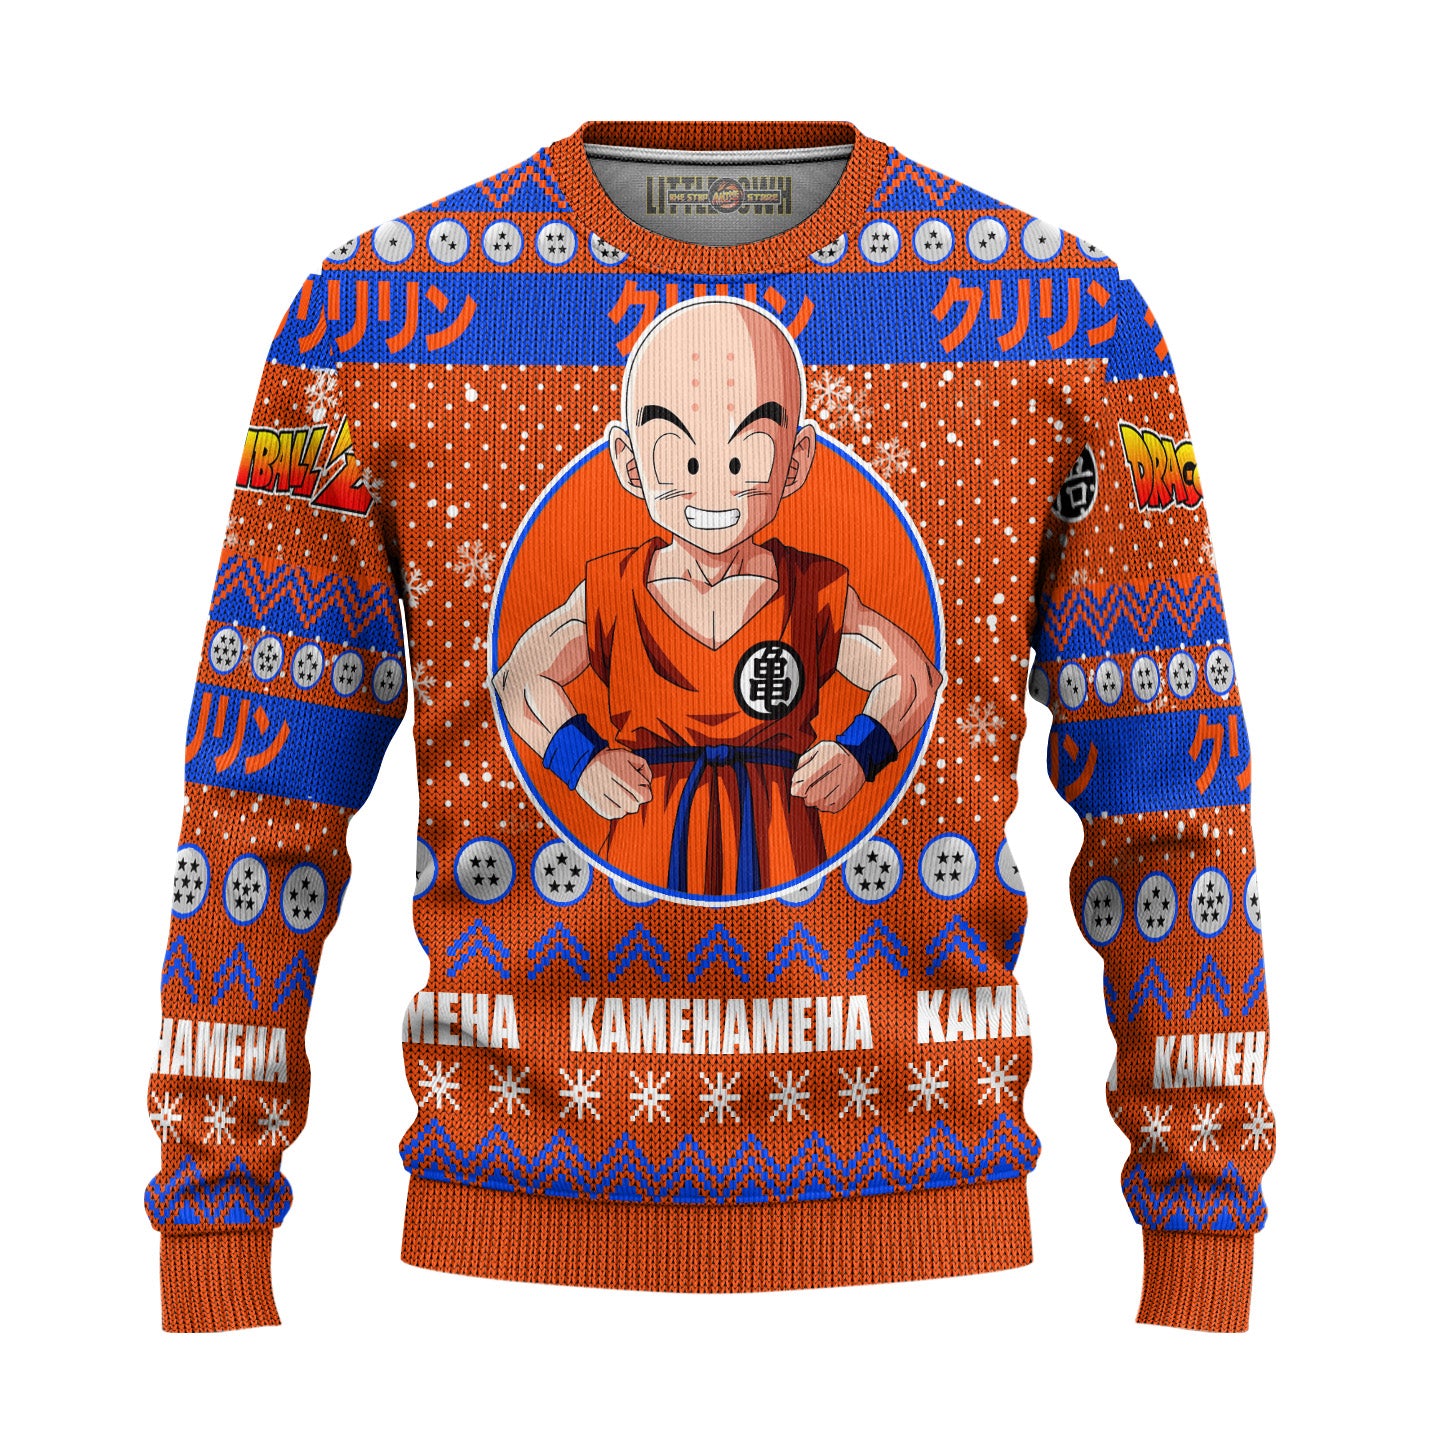 Android 17 Anime Ugly Christmas Sweater Dragon Ball Z New Design